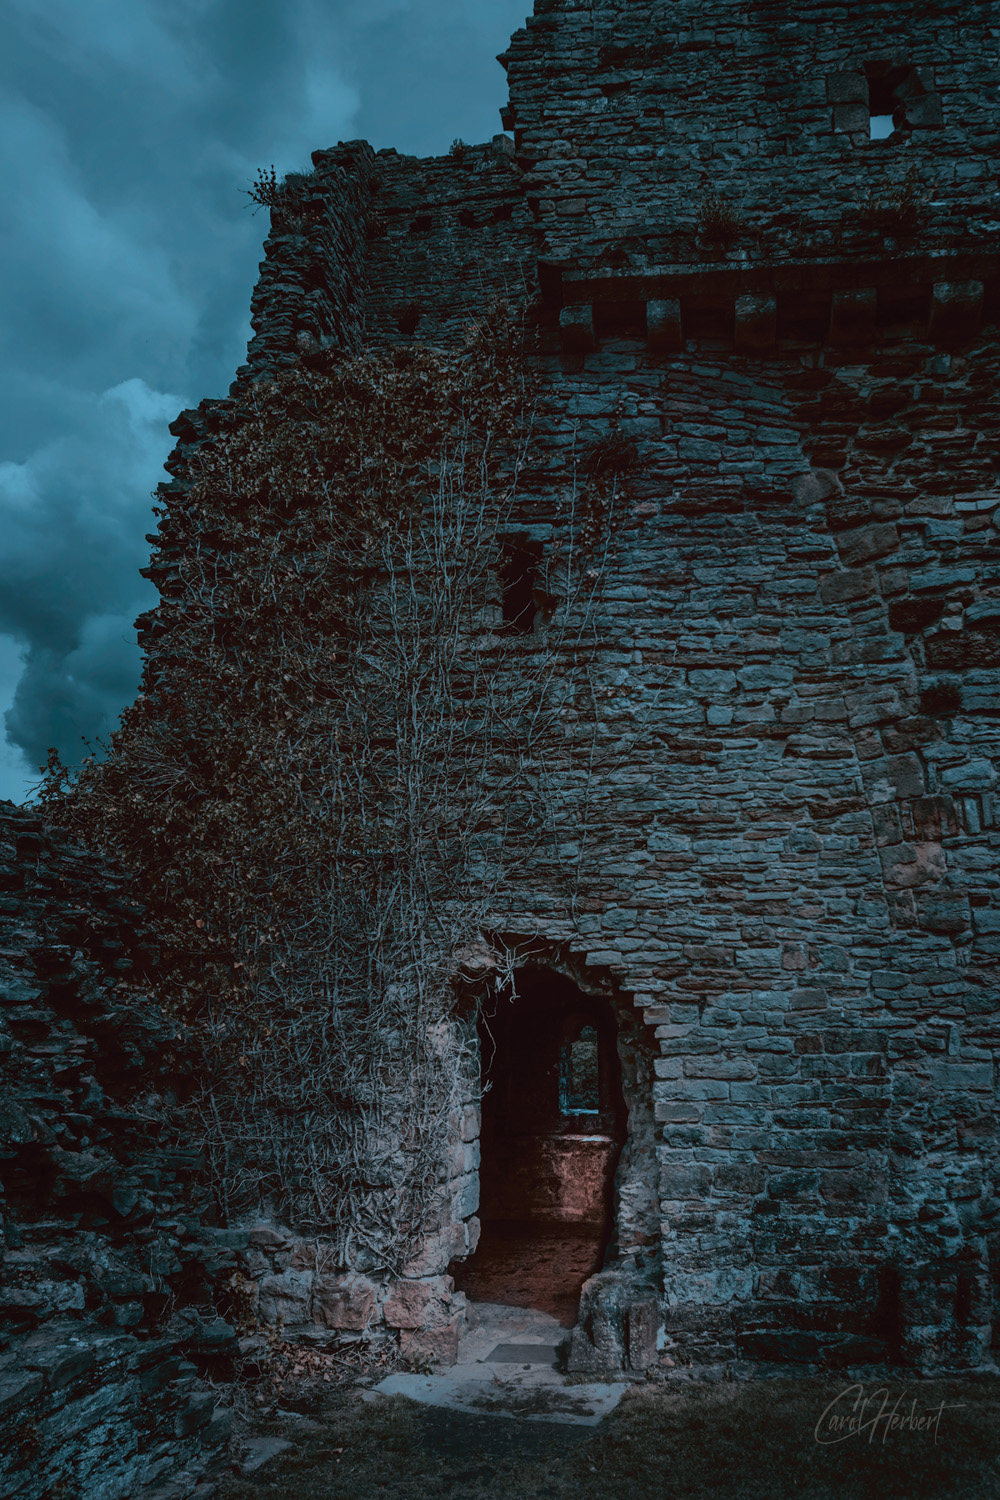 A spooky looking doorway in a ruined castle tower